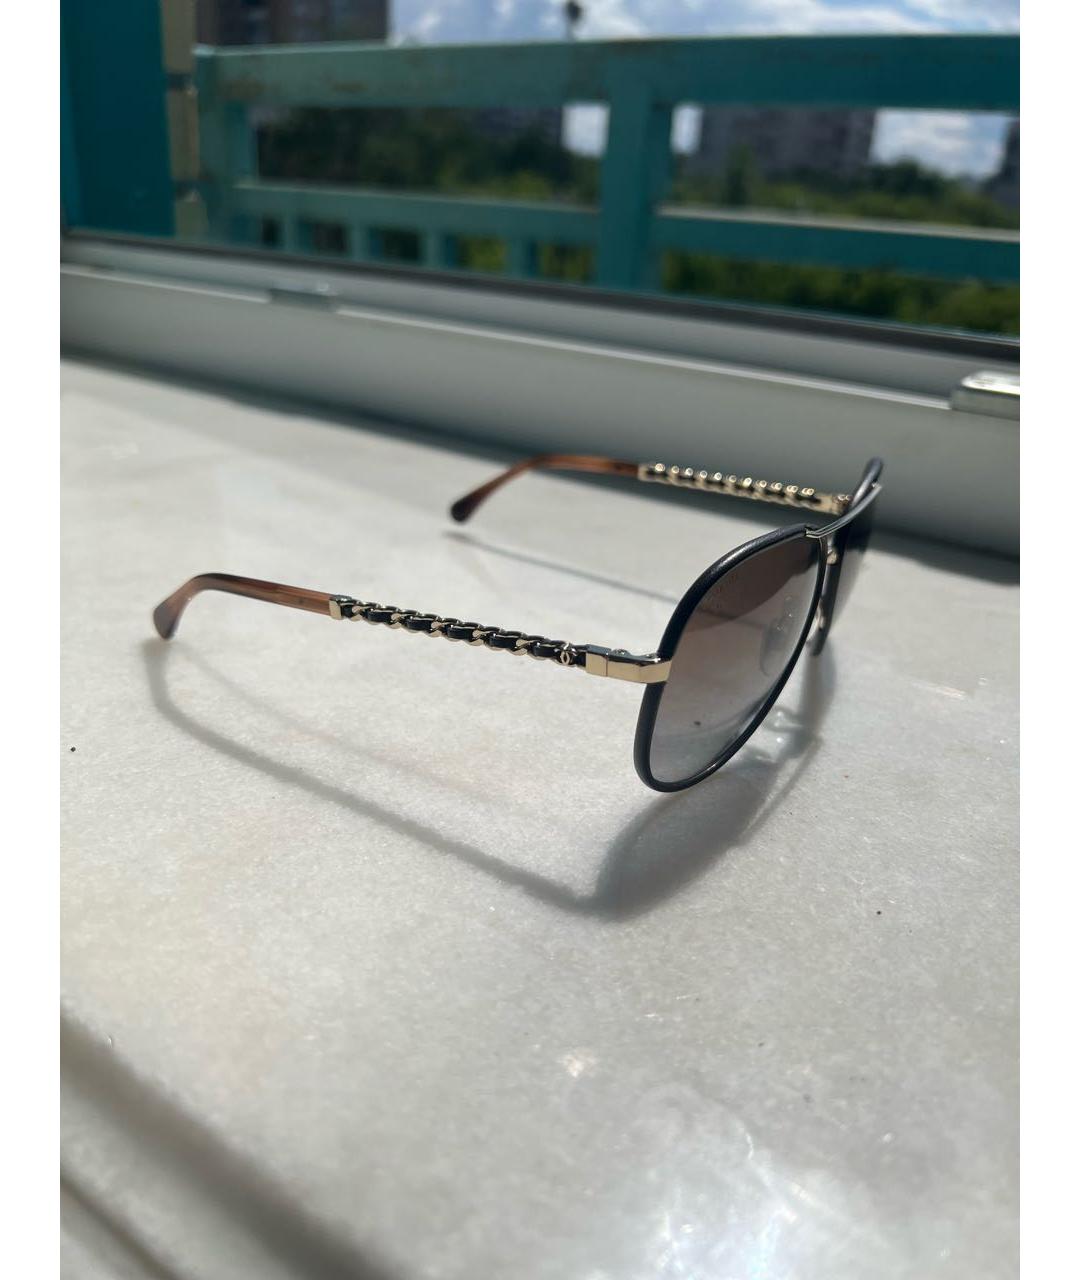 CHANEL PRE-OWNED Коричневые солнцезащитные очки, фото 2